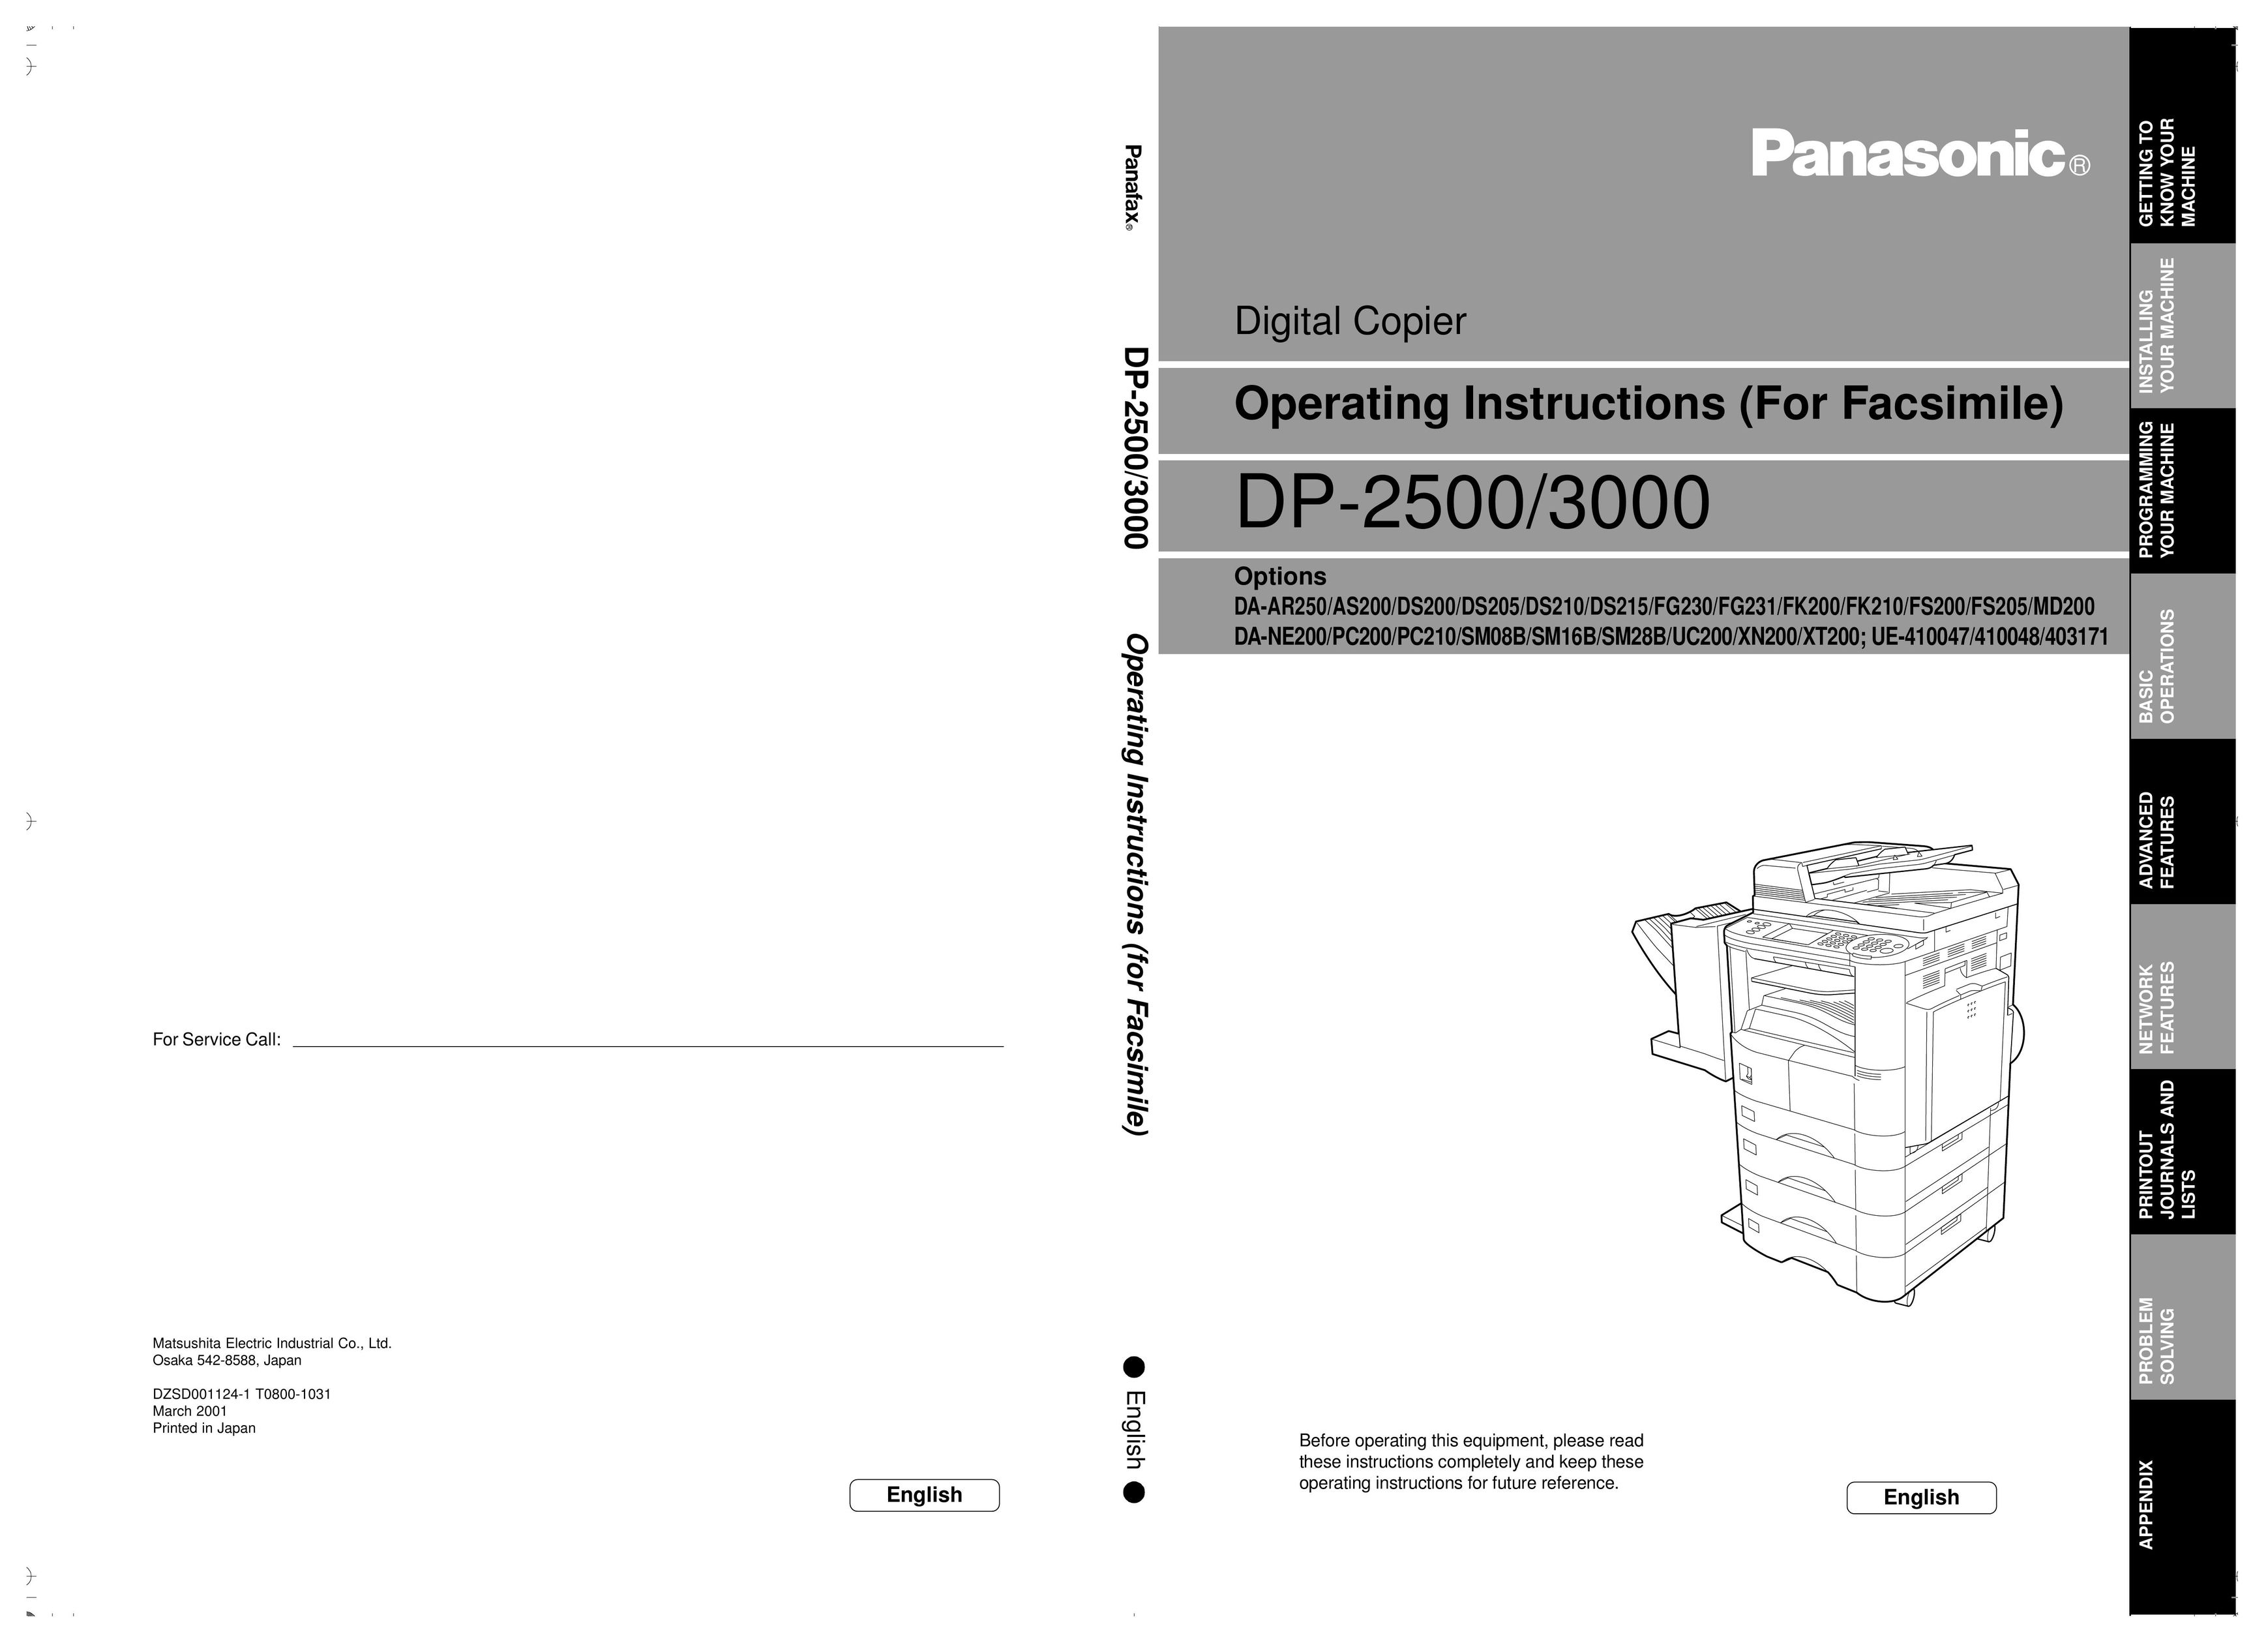 Panasonic DP-2500/3000 Copier User Manual